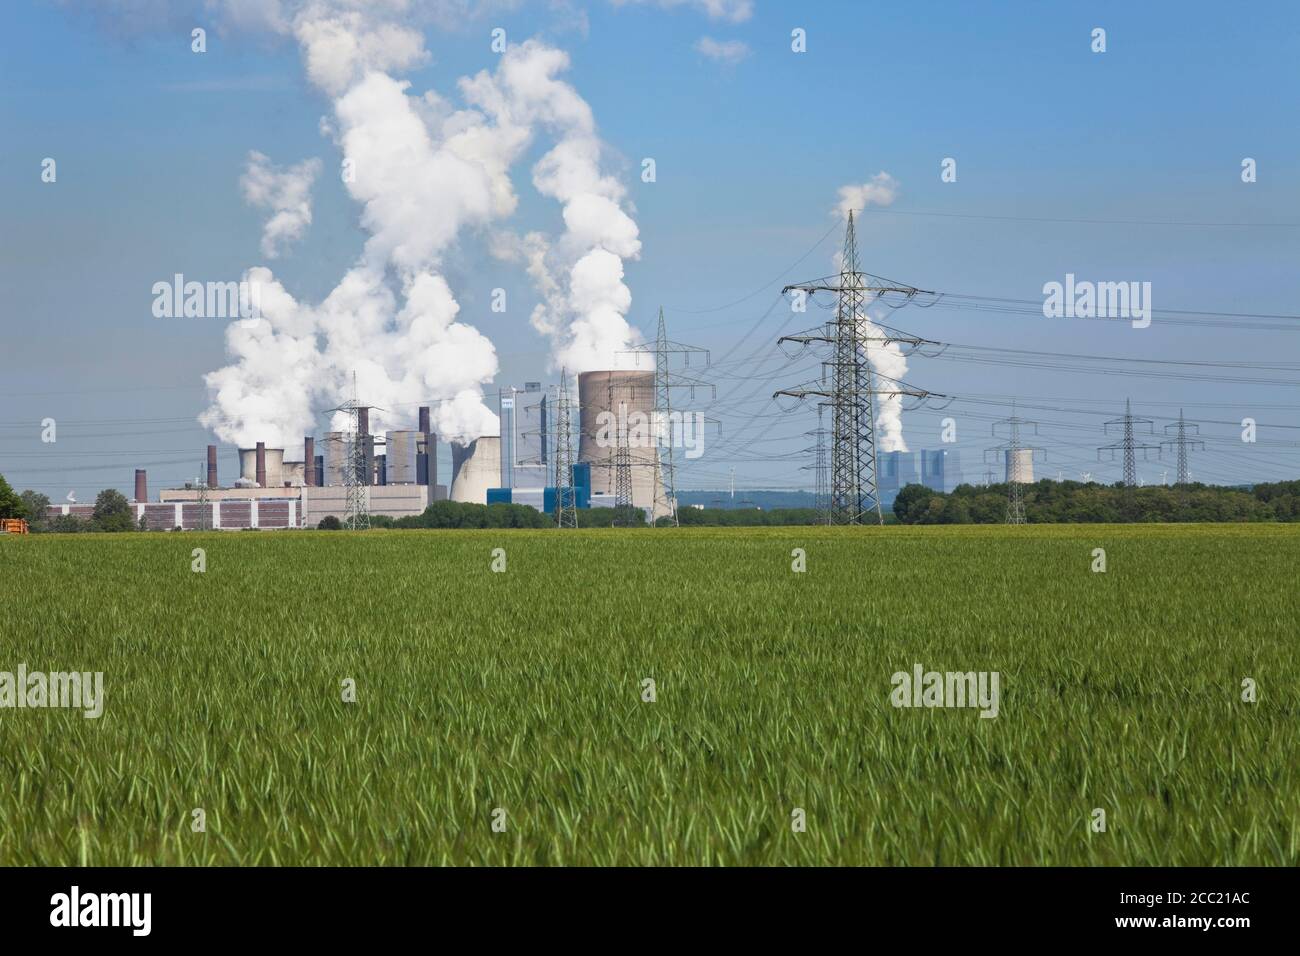 Germany, North Rhine Westphalia, View of Power plant Stock Photo